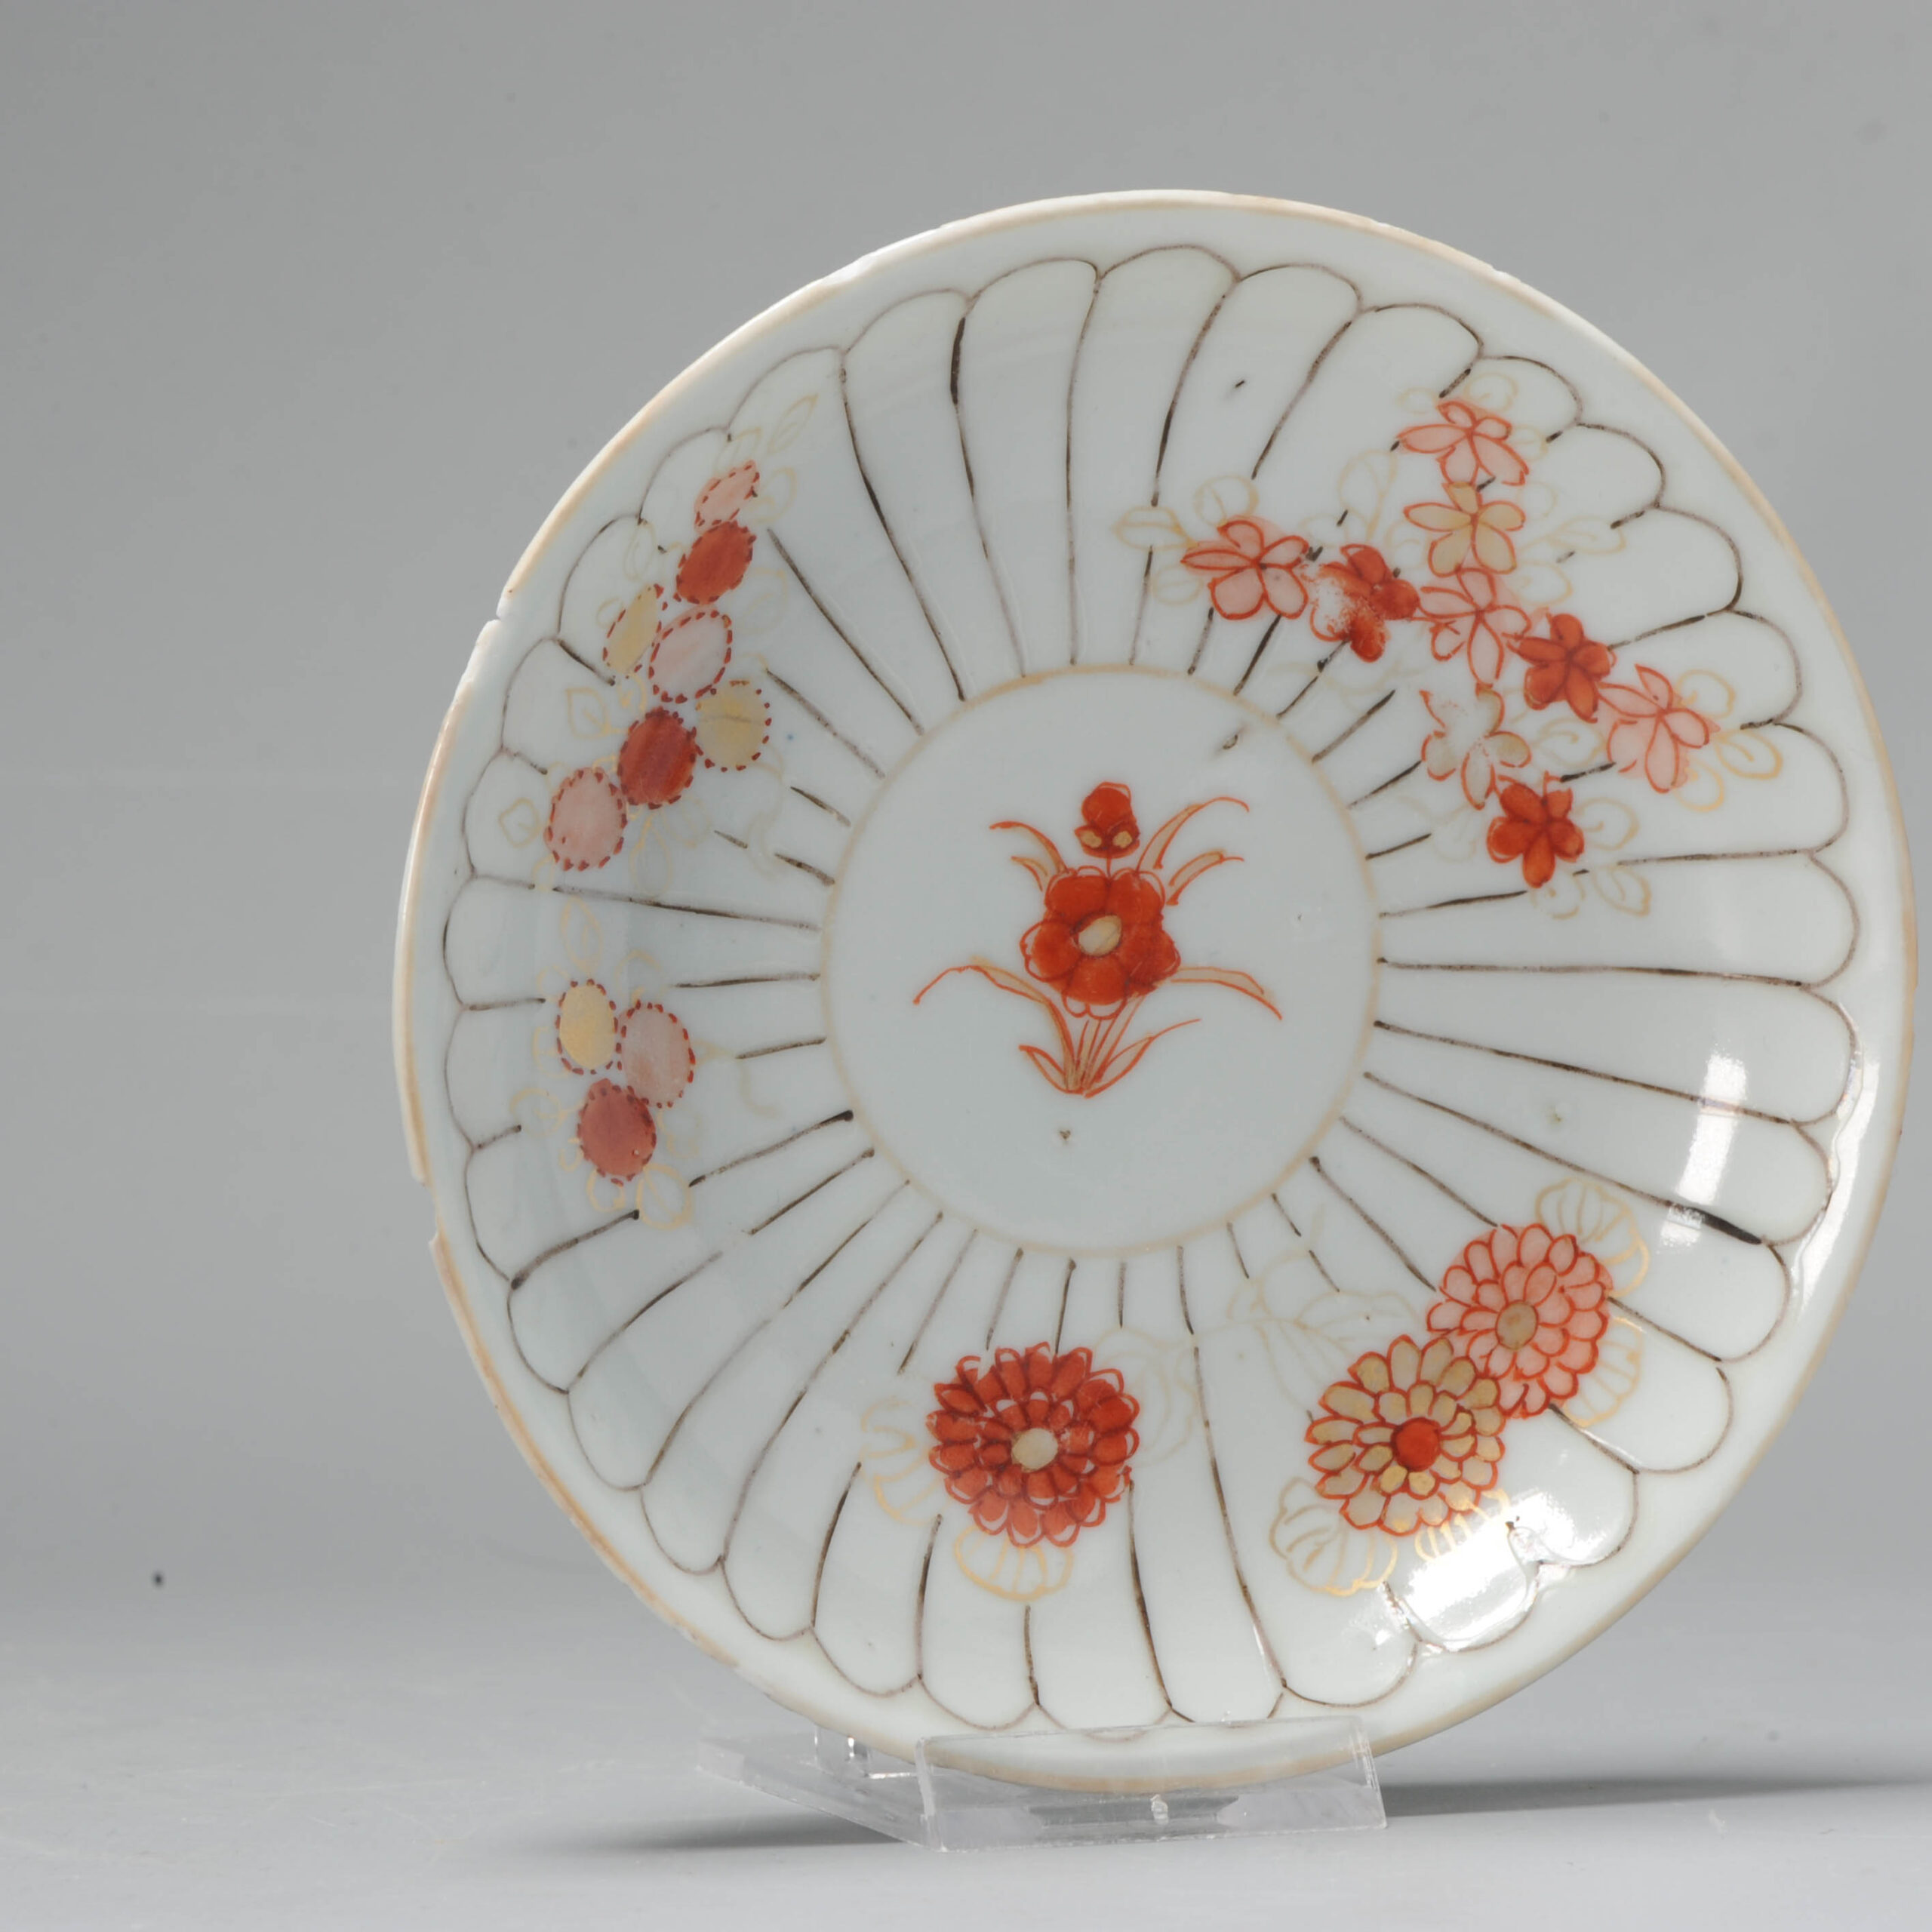 Arita Edo period Japanese Porcelain Saucer Dish Japan Flowers